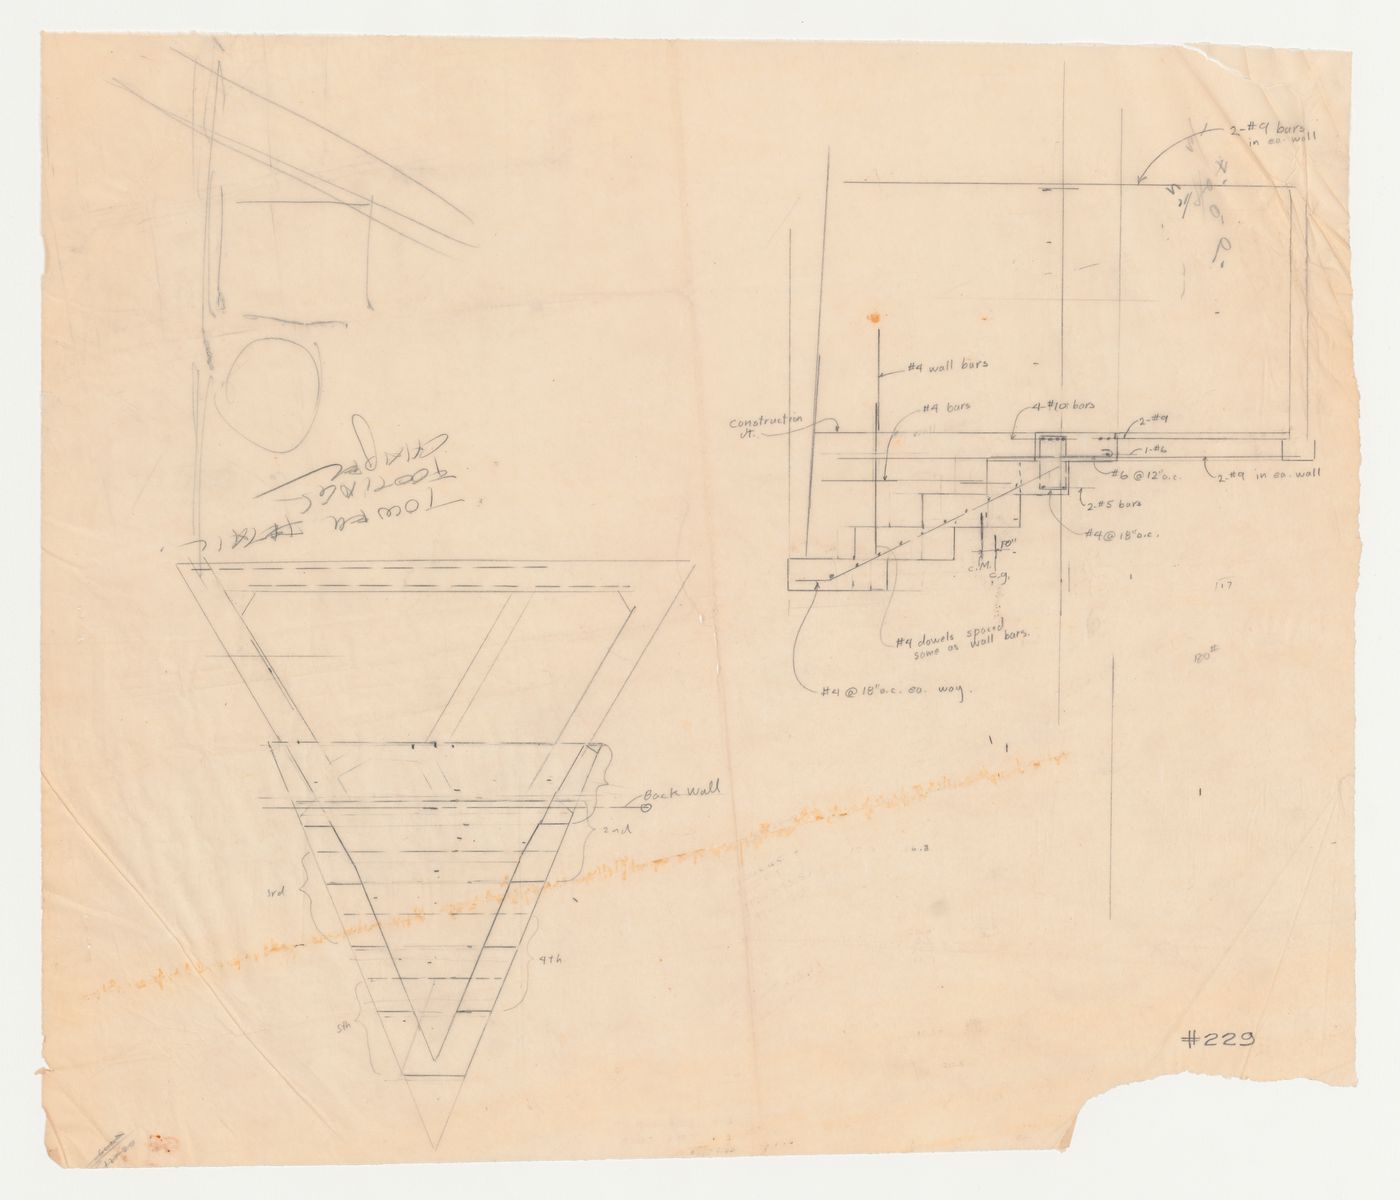 Wayfarers' Chapel, Palos Verdes, California: Plan and section for campanile footings